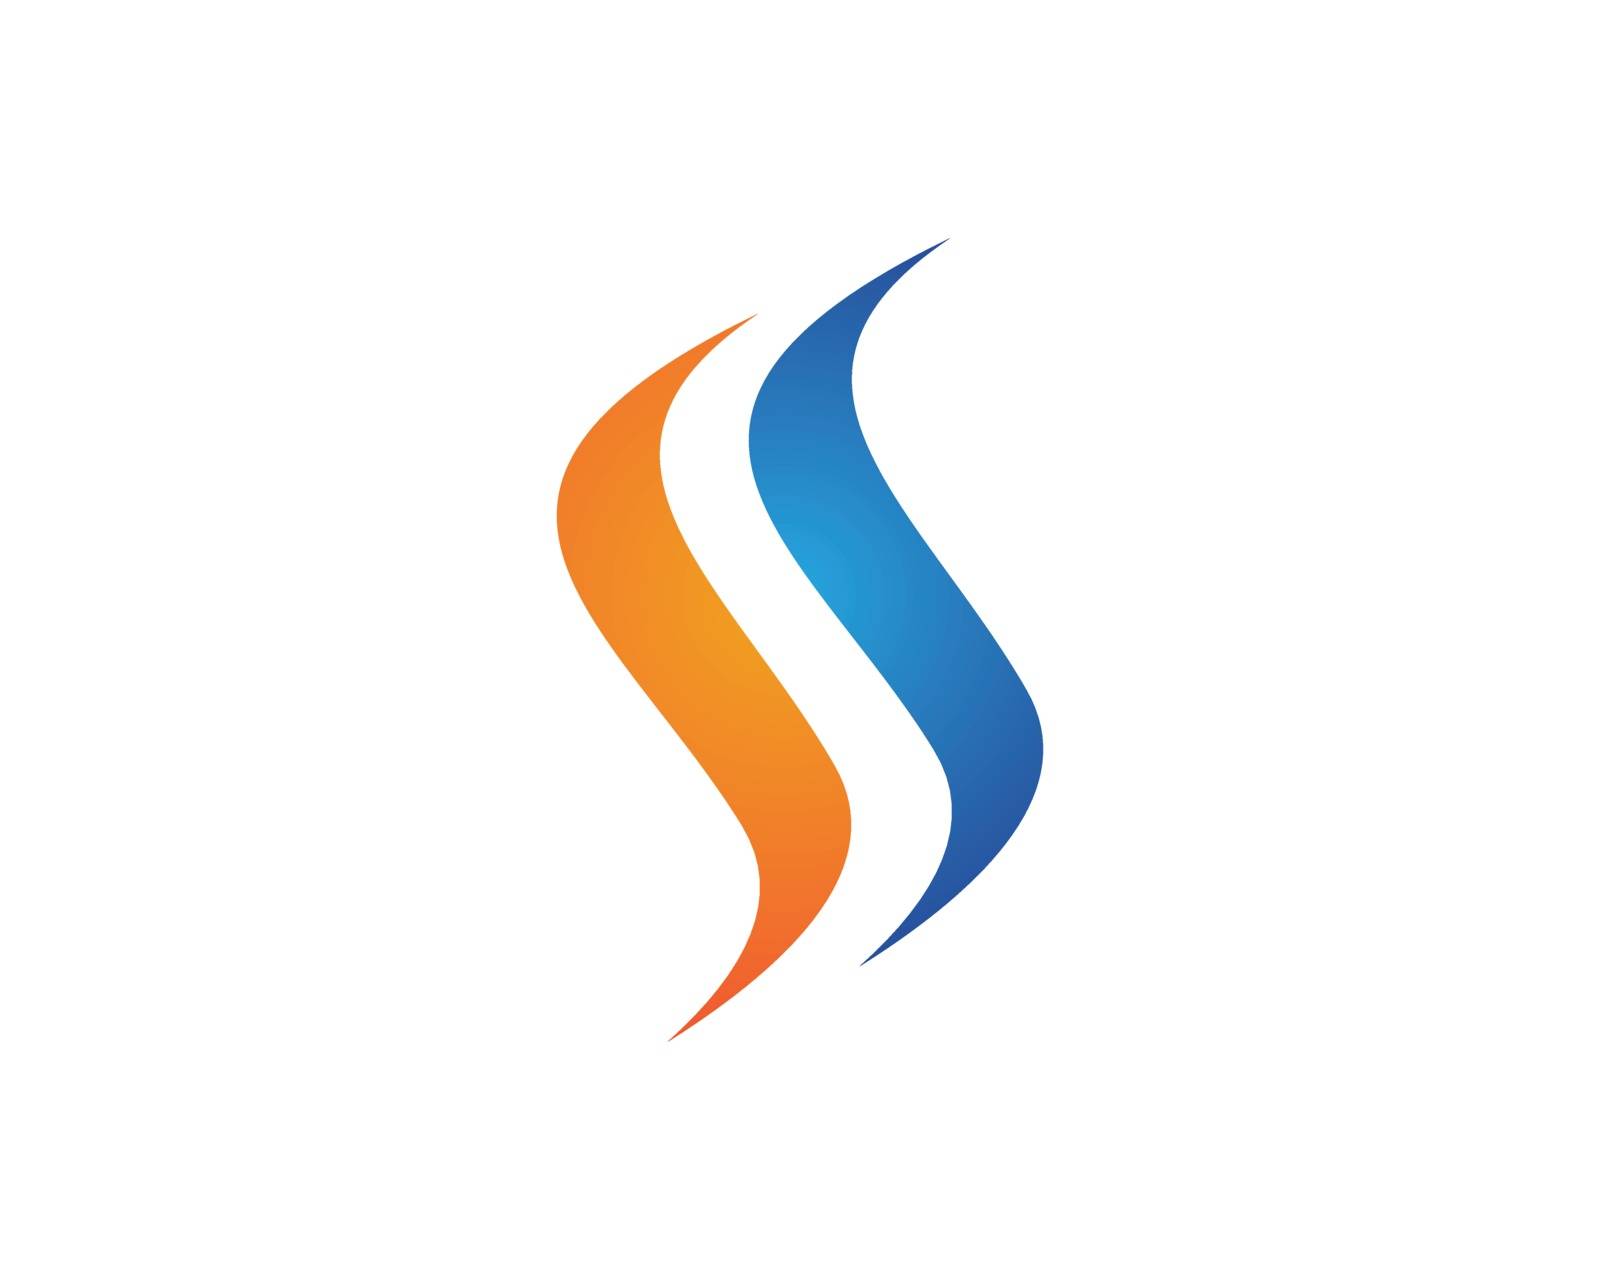 S letter logo, volume icon design template element